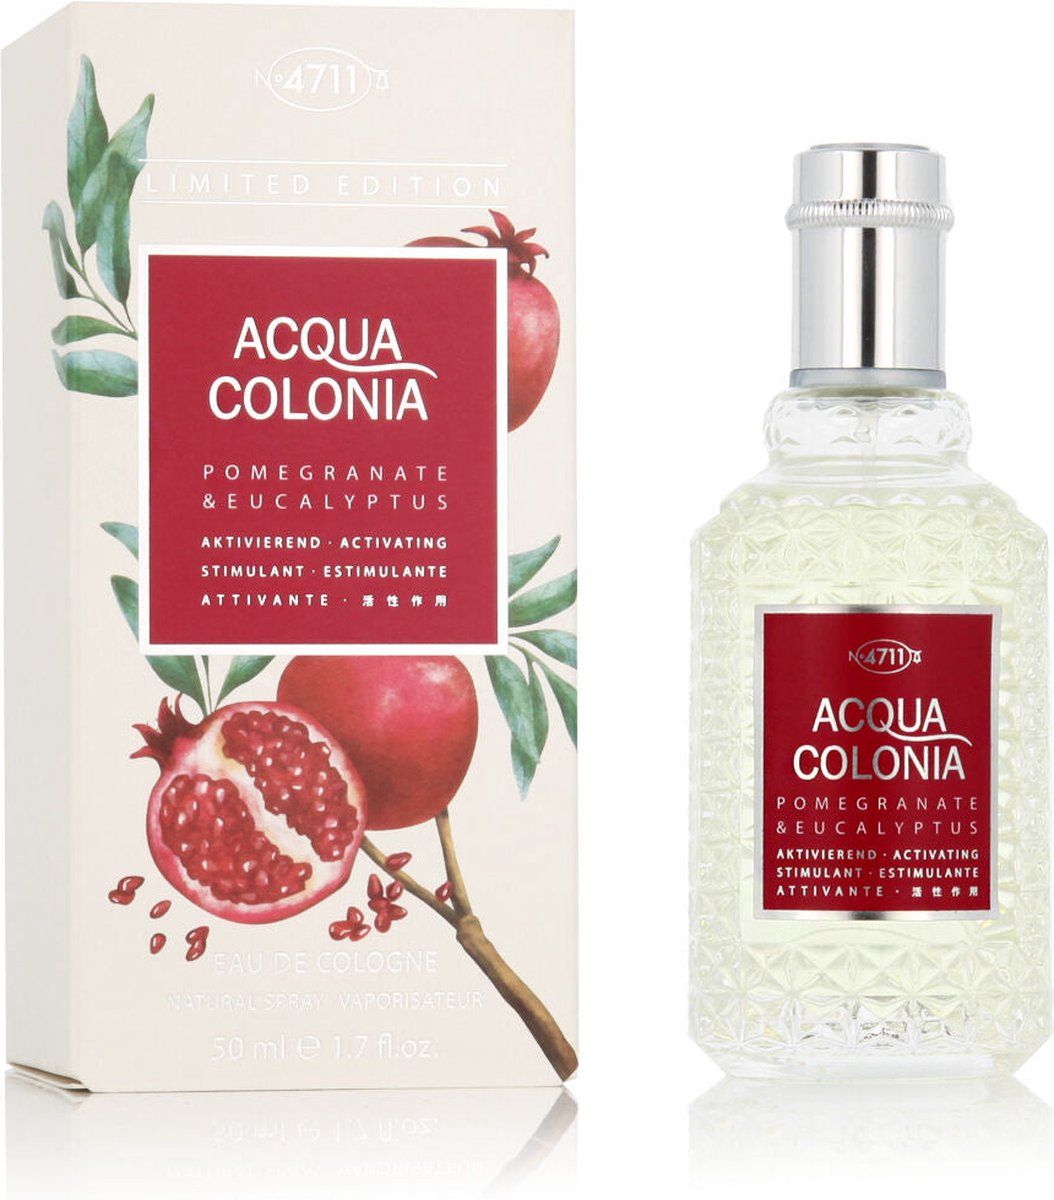 4711-acqua-colonia-pomegranateeucalyptus-eau-de-cologne-50-ml